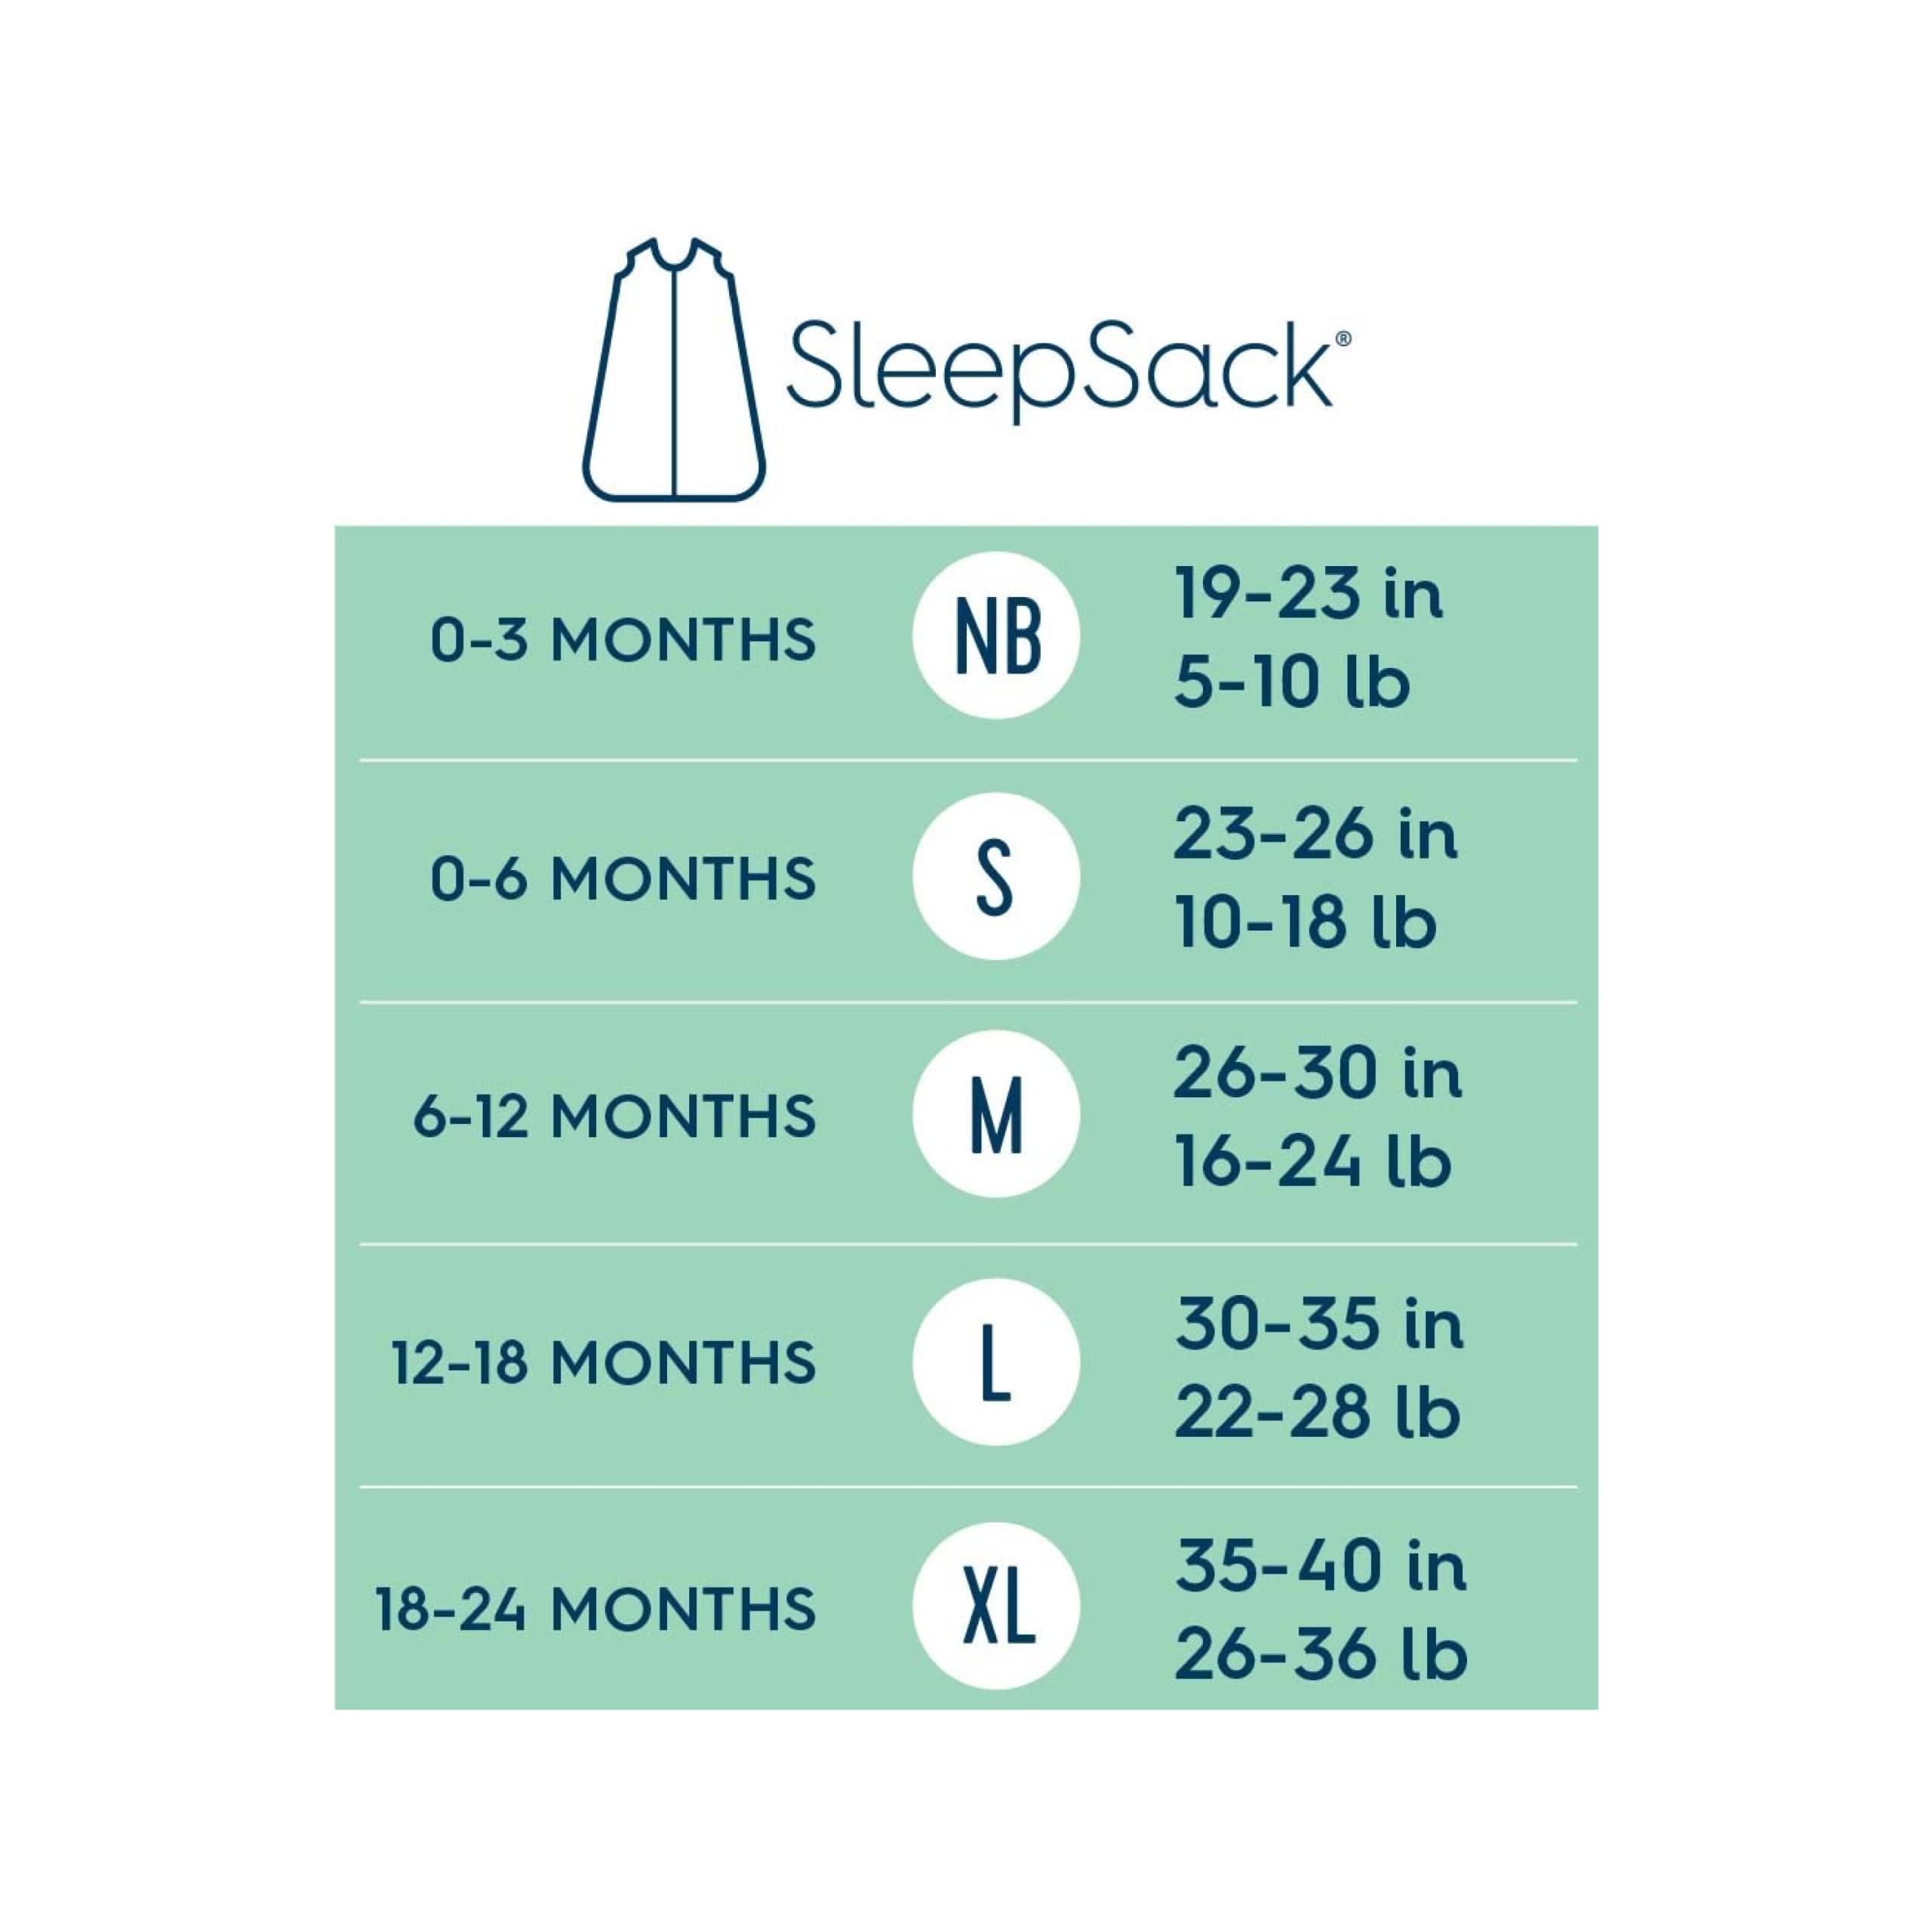 HALO Sleepsack, 100% Cotton Muslin Wearable Blanket, Swaddle Transition Sleeping Bag, TOG 0.5, Grey Tree Leaf, Medium, 6-12 Months